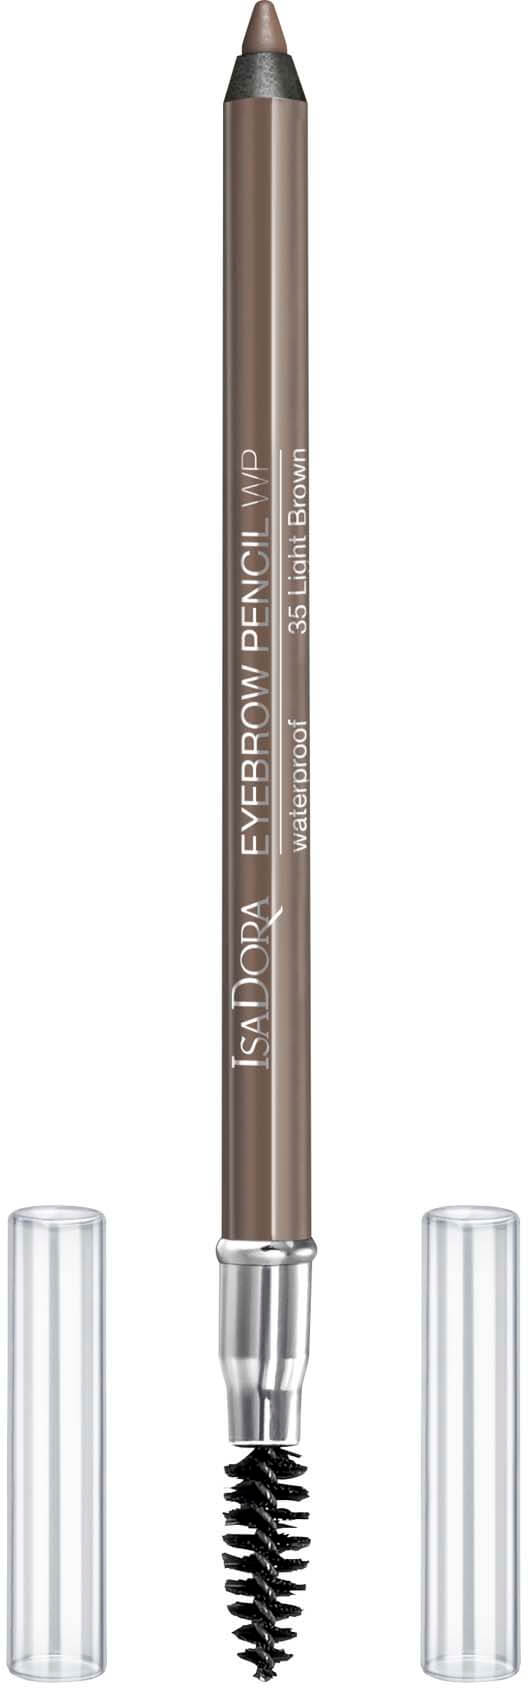 IsaDora Eyebrow Pencil Waterproof Light Brown 35 1.2g